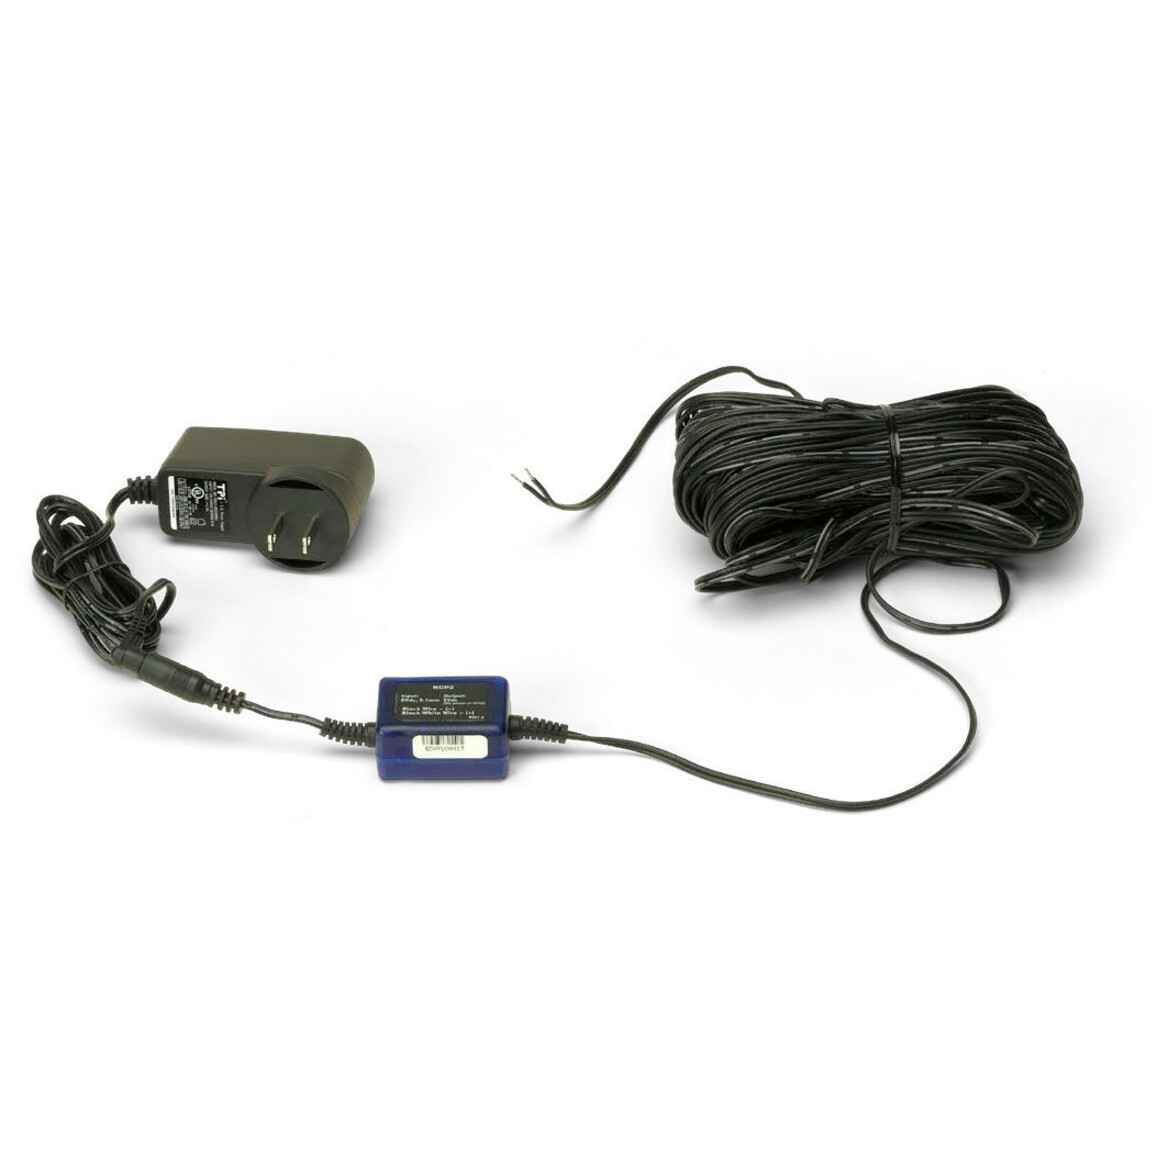 Vertiv Geist Power Failure SensorUS1 / Box PFS-100 US